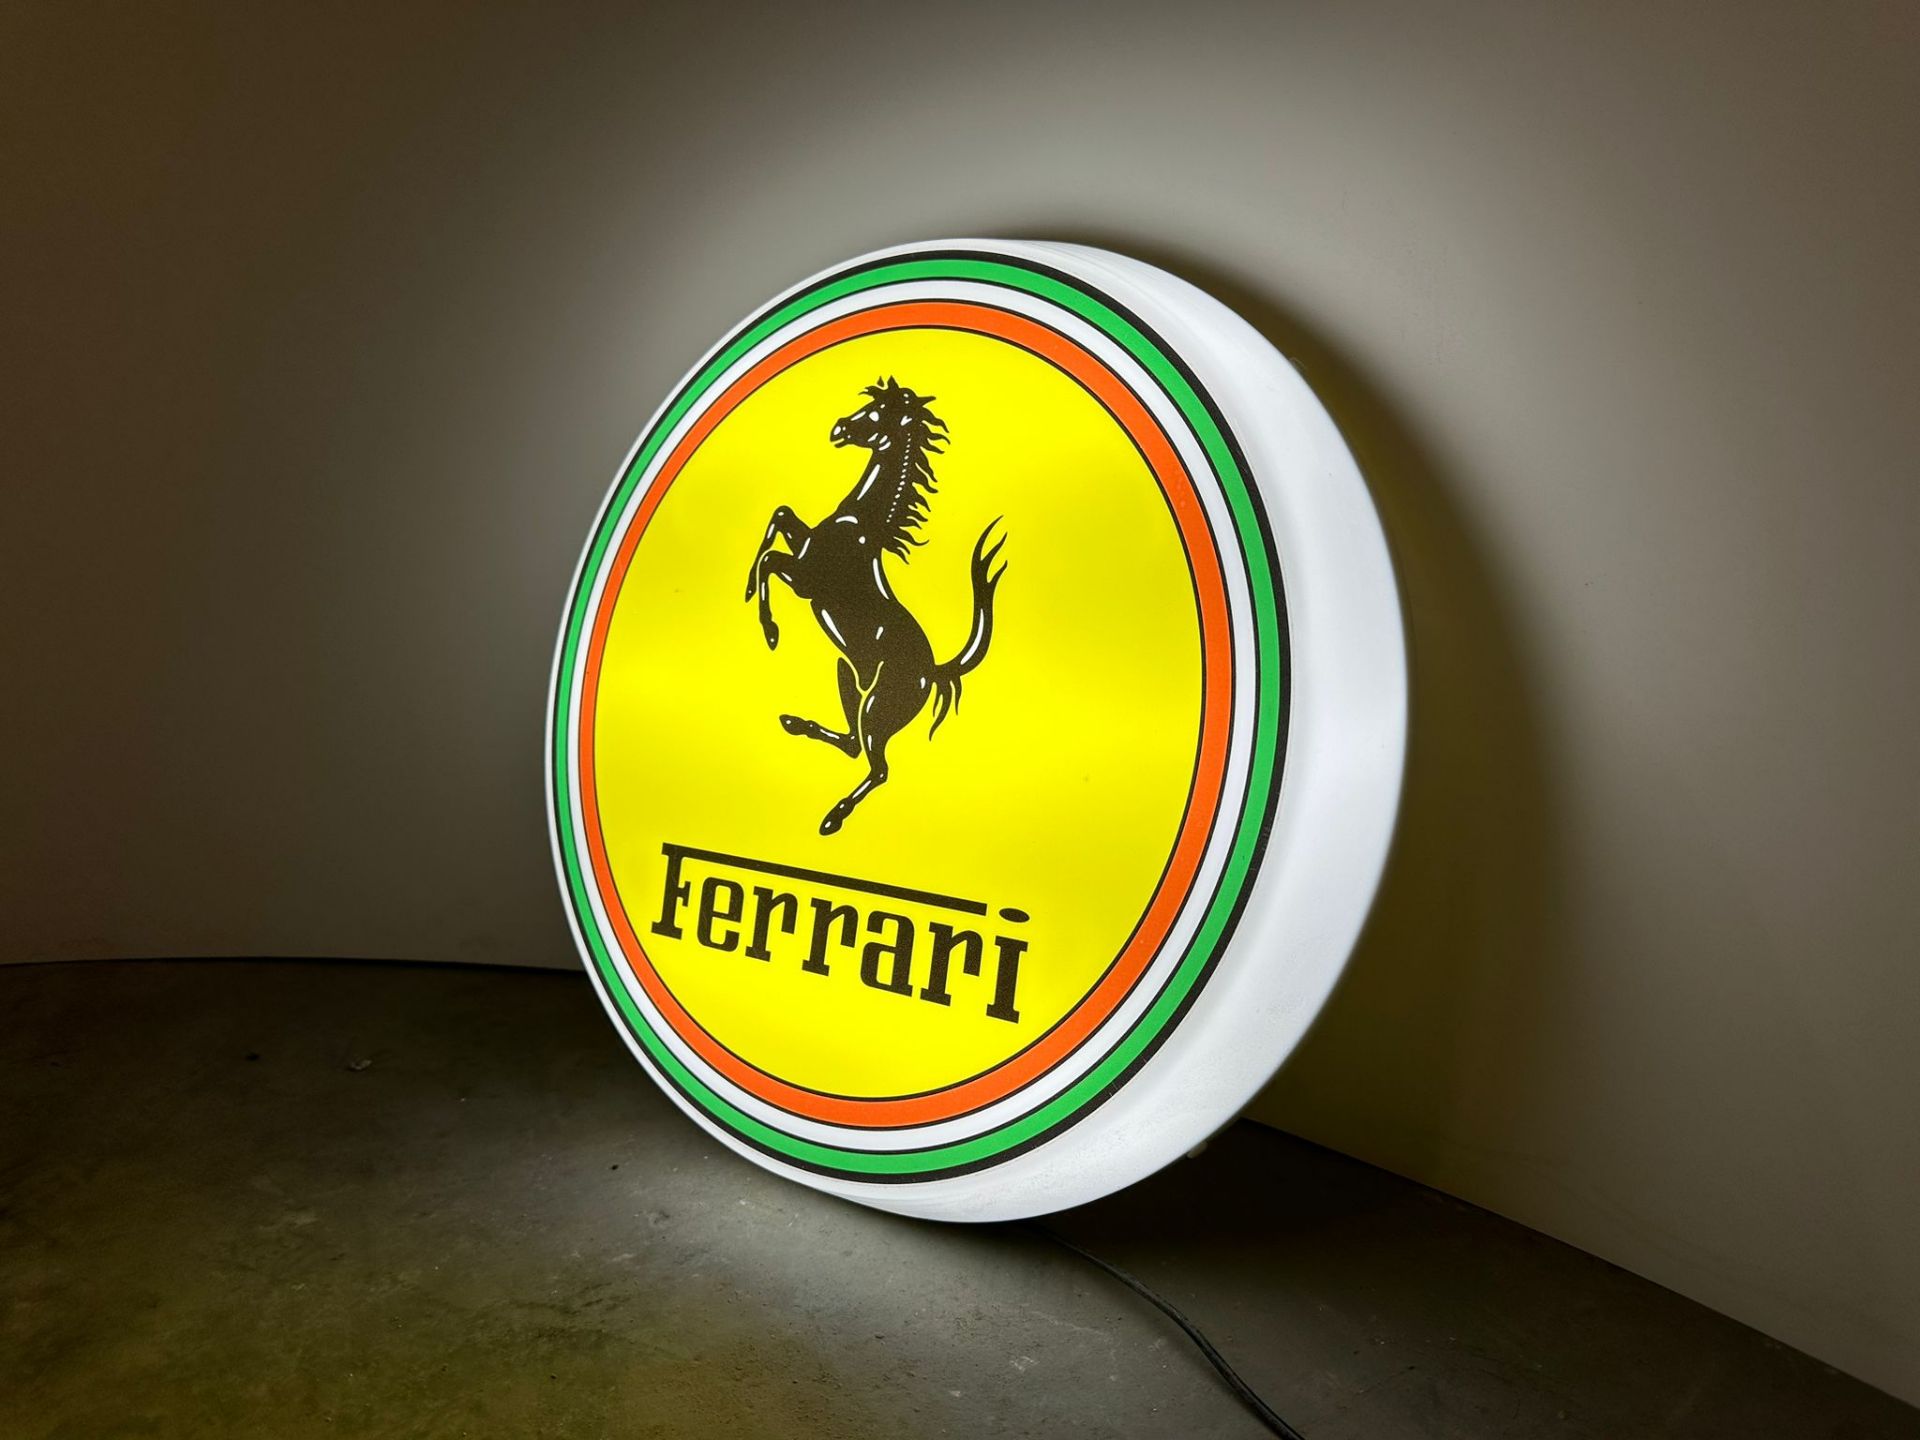 Ferrari fully working illuminated adapted to any country - Bild 3 aus 6